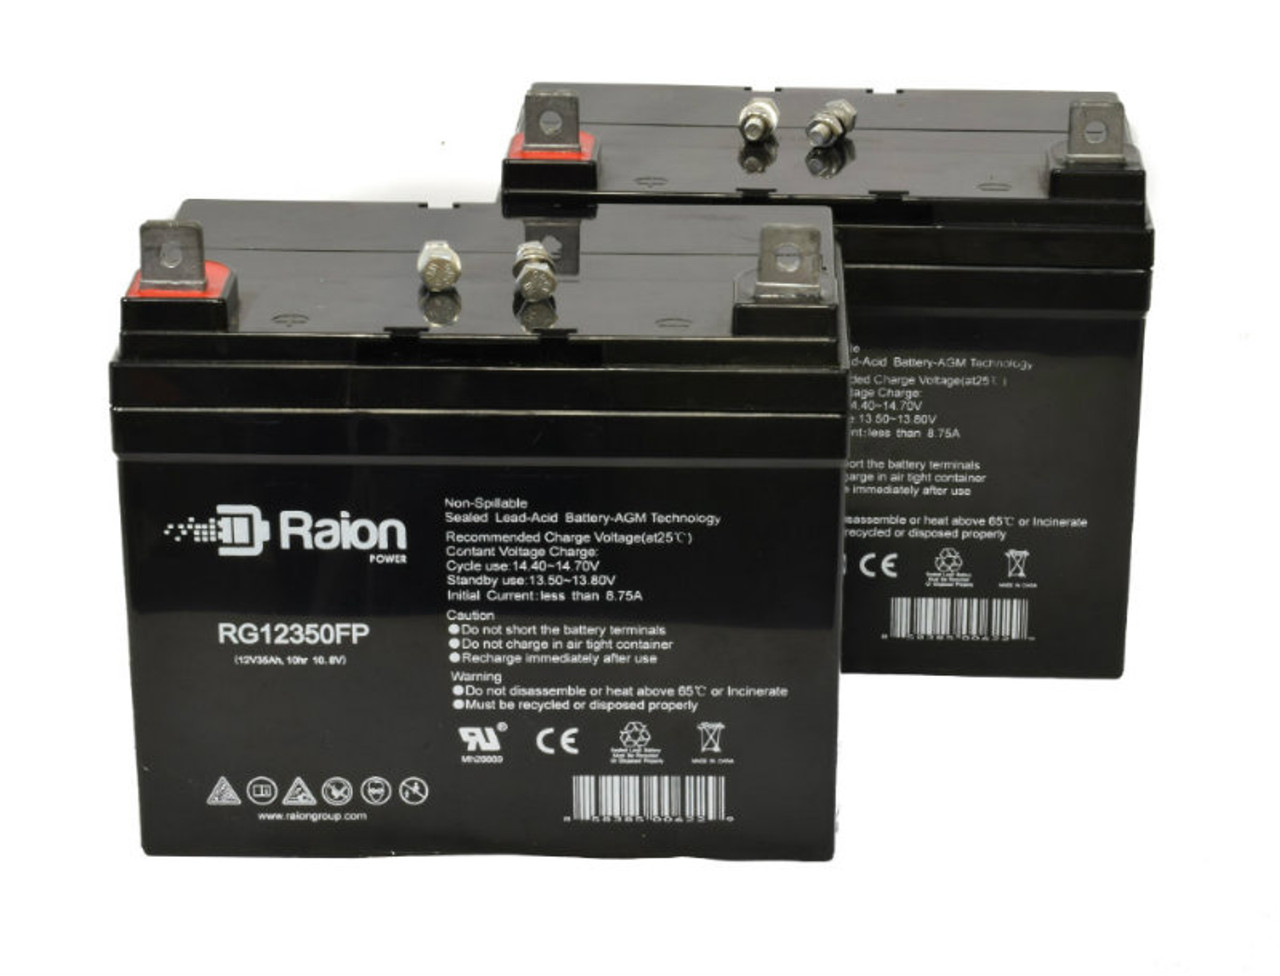 Raion Power Replacement 12V 35Ah Lawn Mower Battery for John Deere 260 - 2 Pack